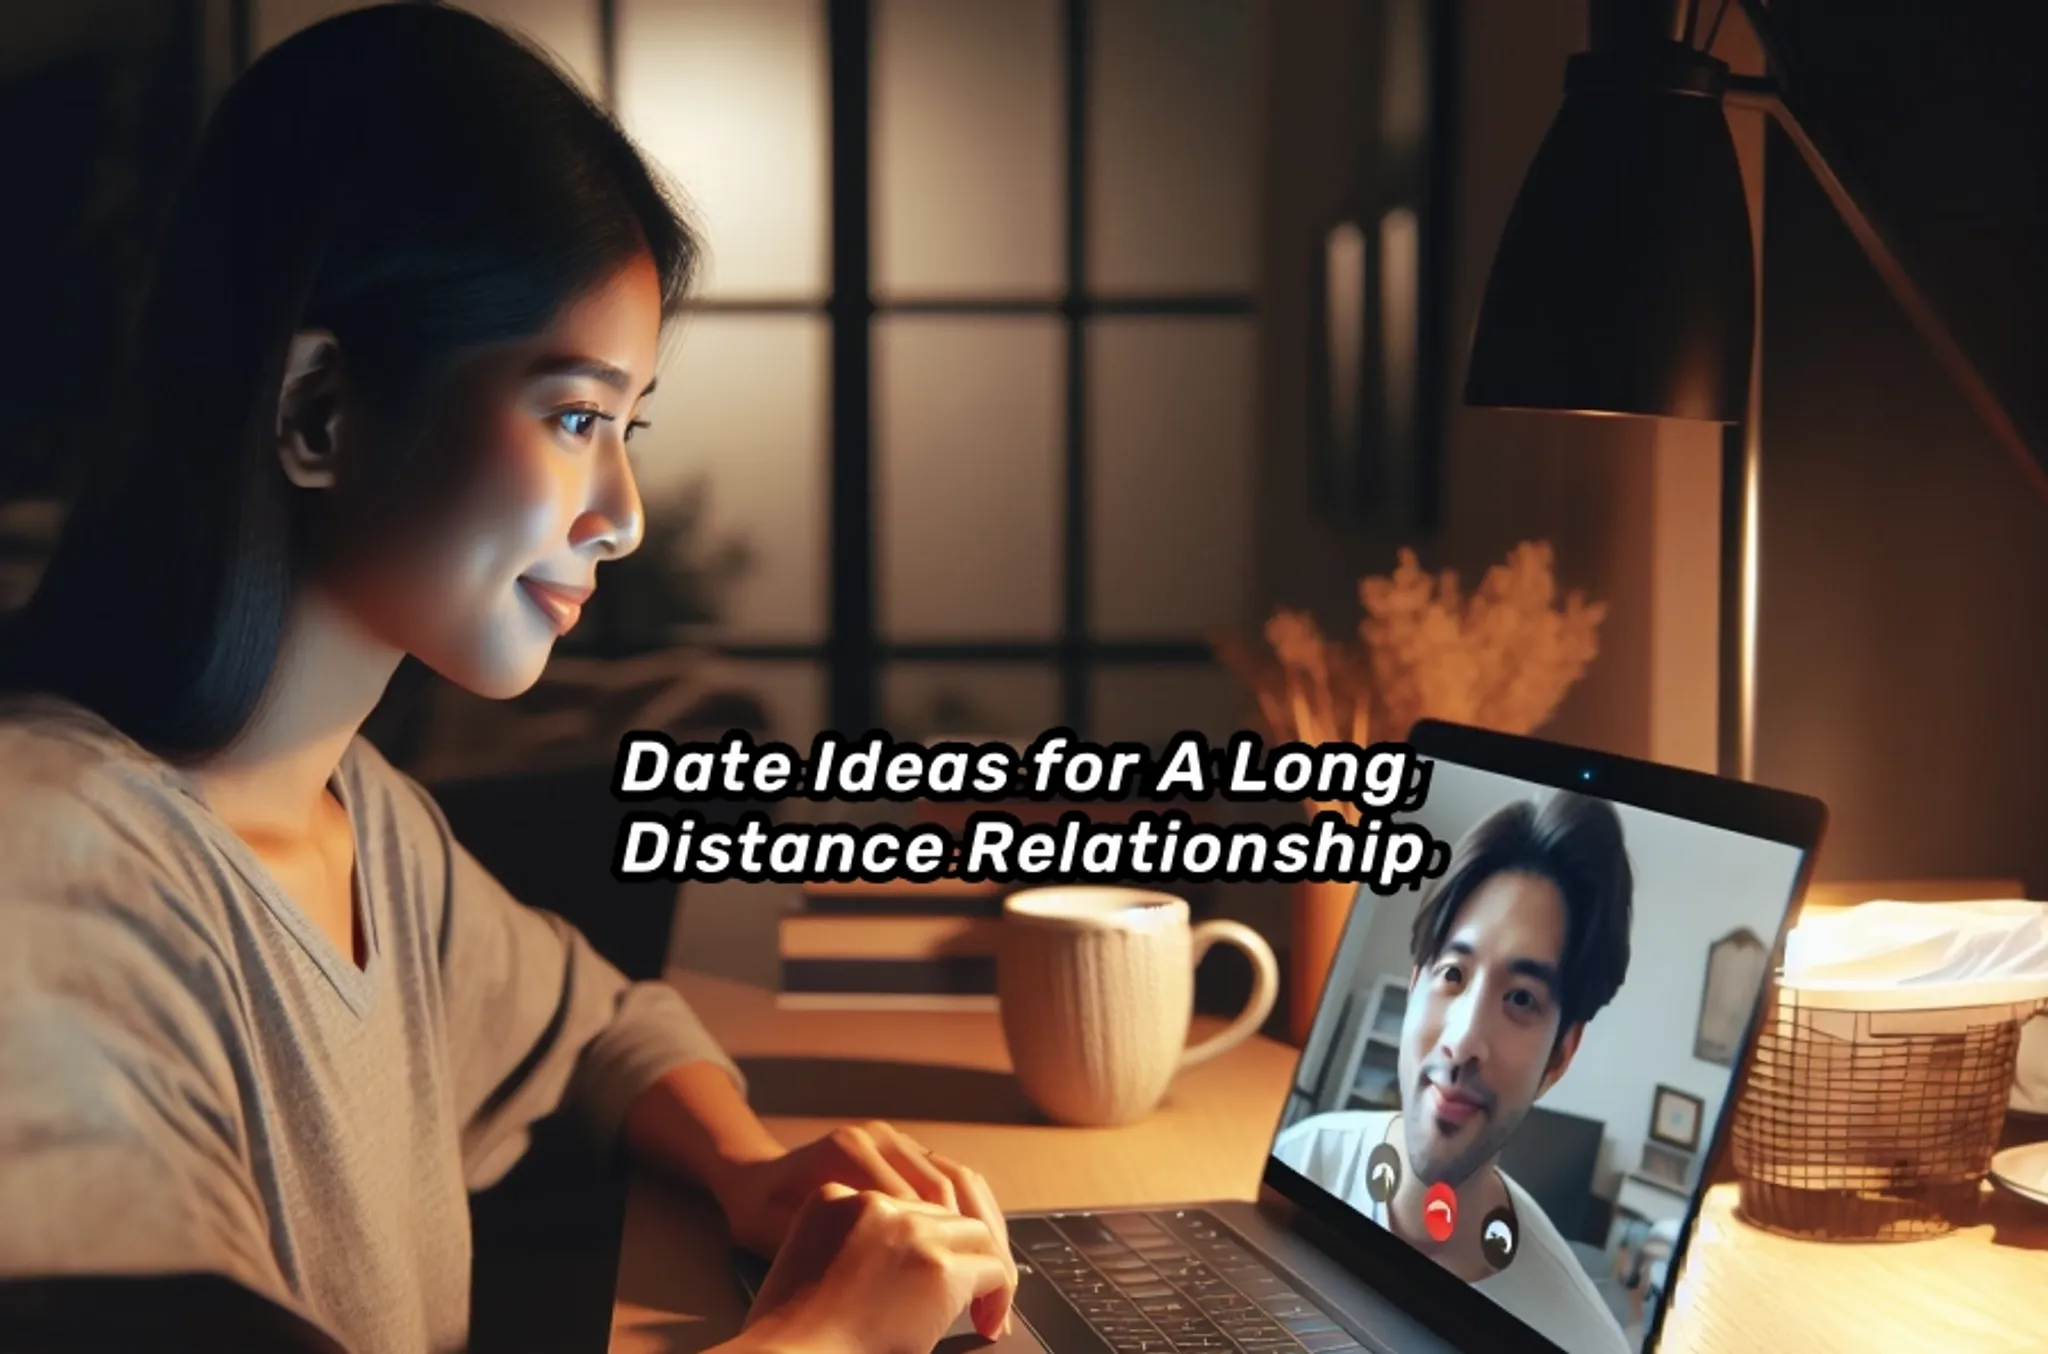 long distance date ideas